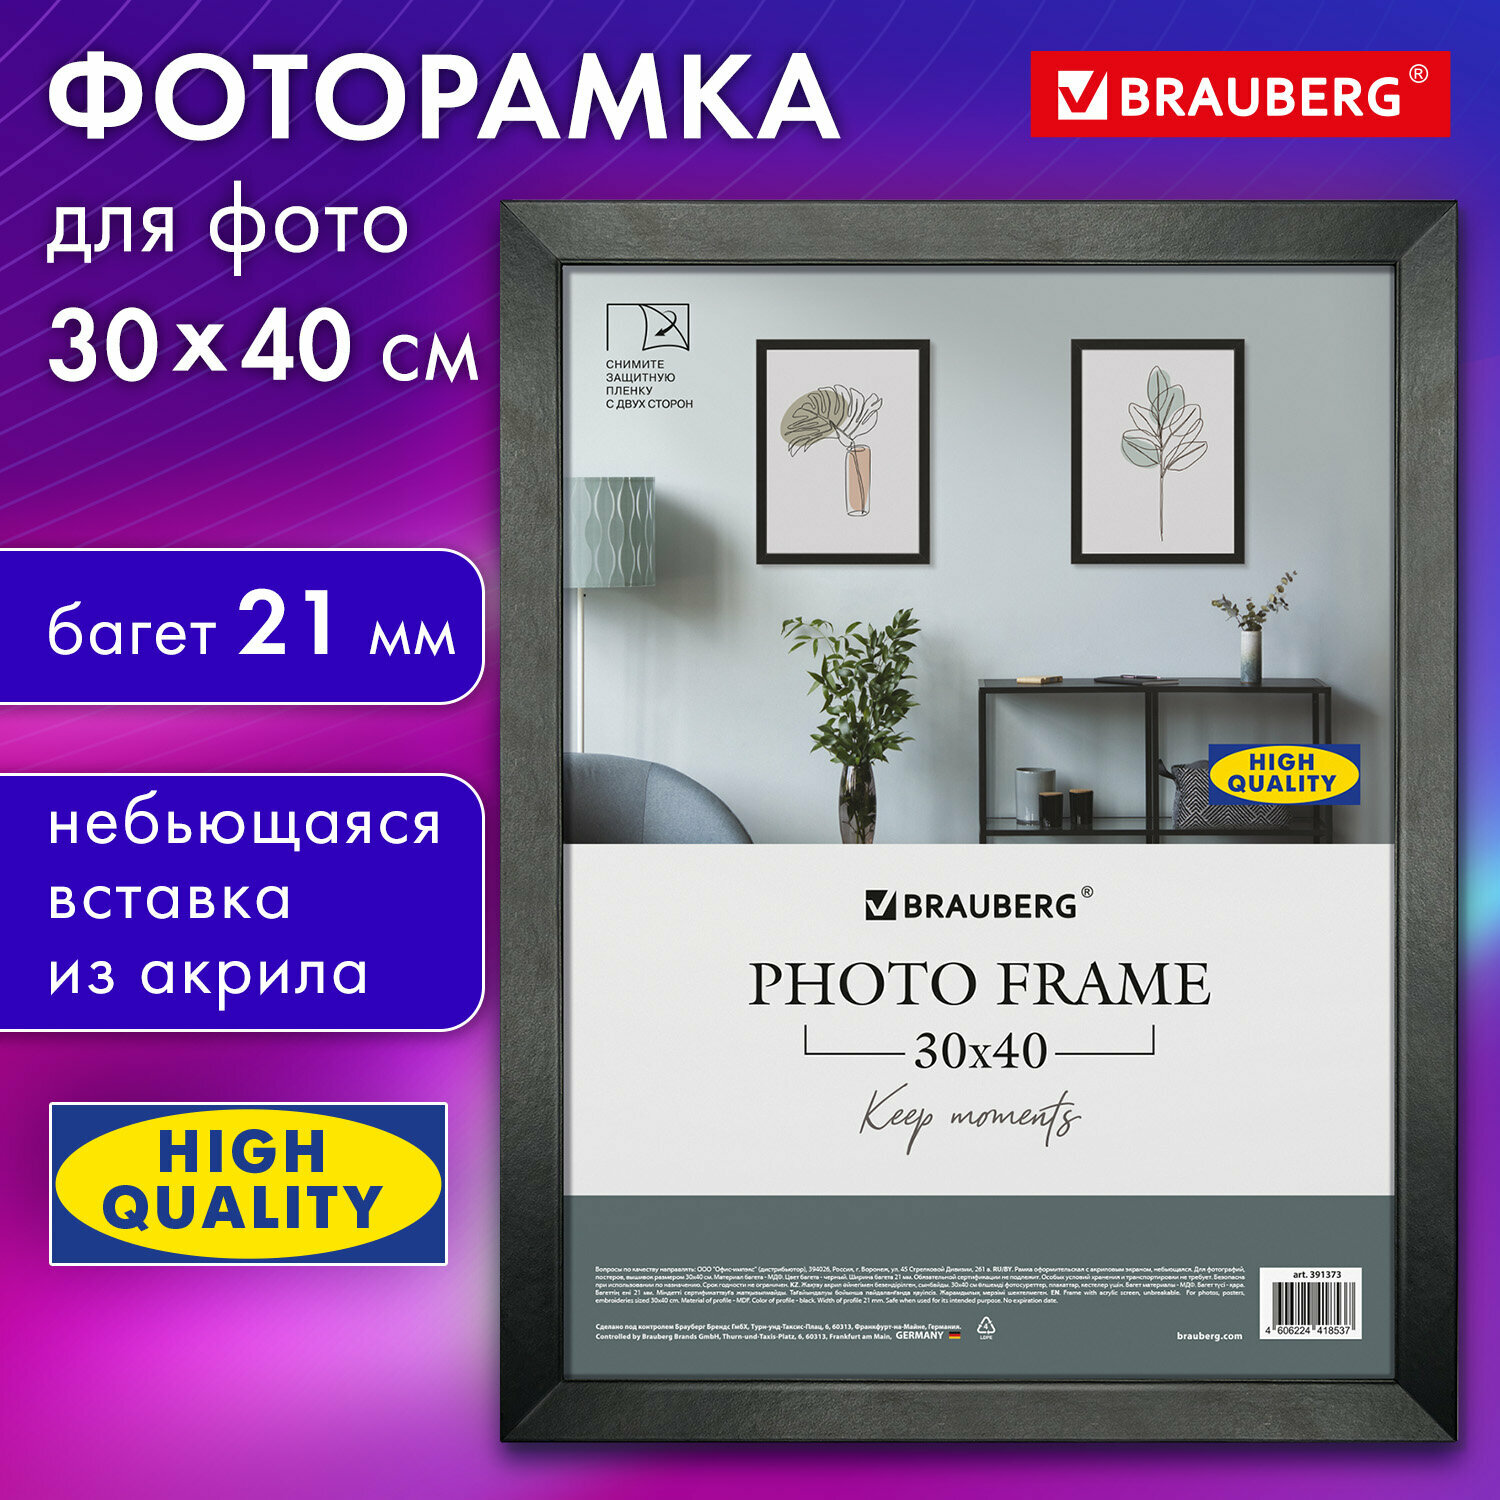 Рамка для фото, фоторамка 30х40 см для фотографий, картин, грамот, вышивки небьющаяся аналог IKEA, багет 21 мм МДФ, Brauberg, черная, 391373